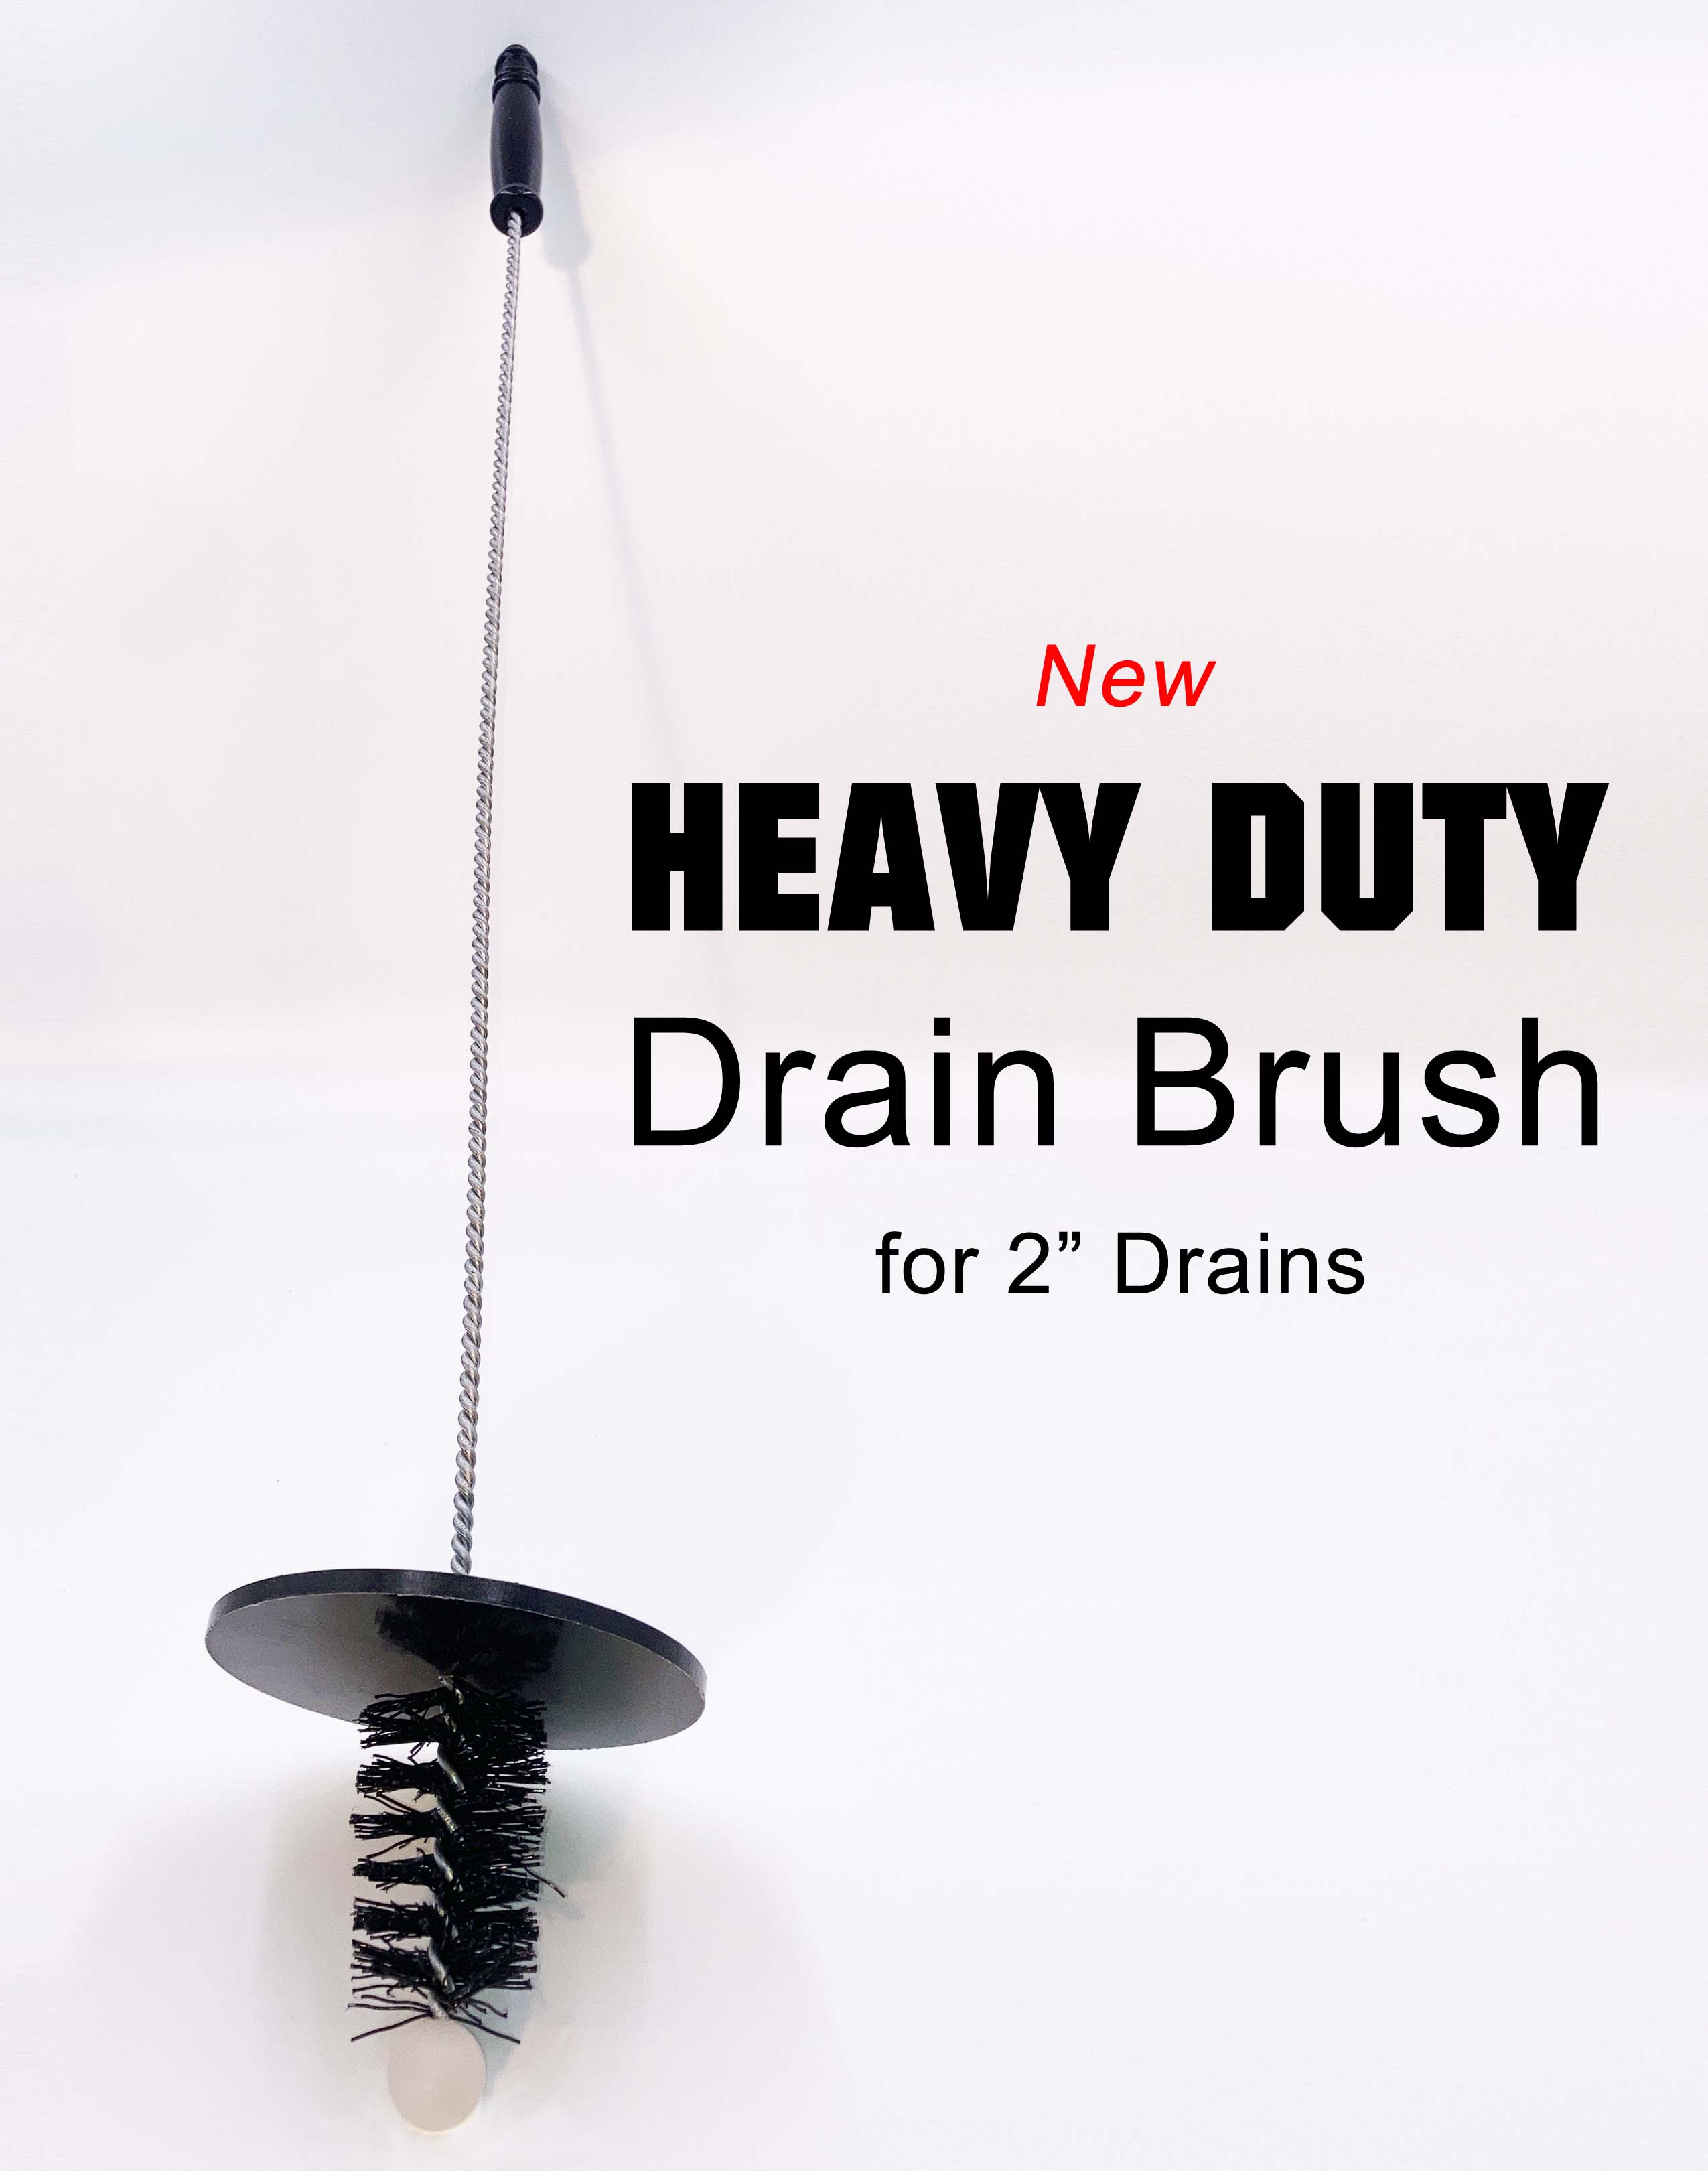 Heavy Duty Drain Brush with Splash Guard™ - Cleans 2 inch Drains